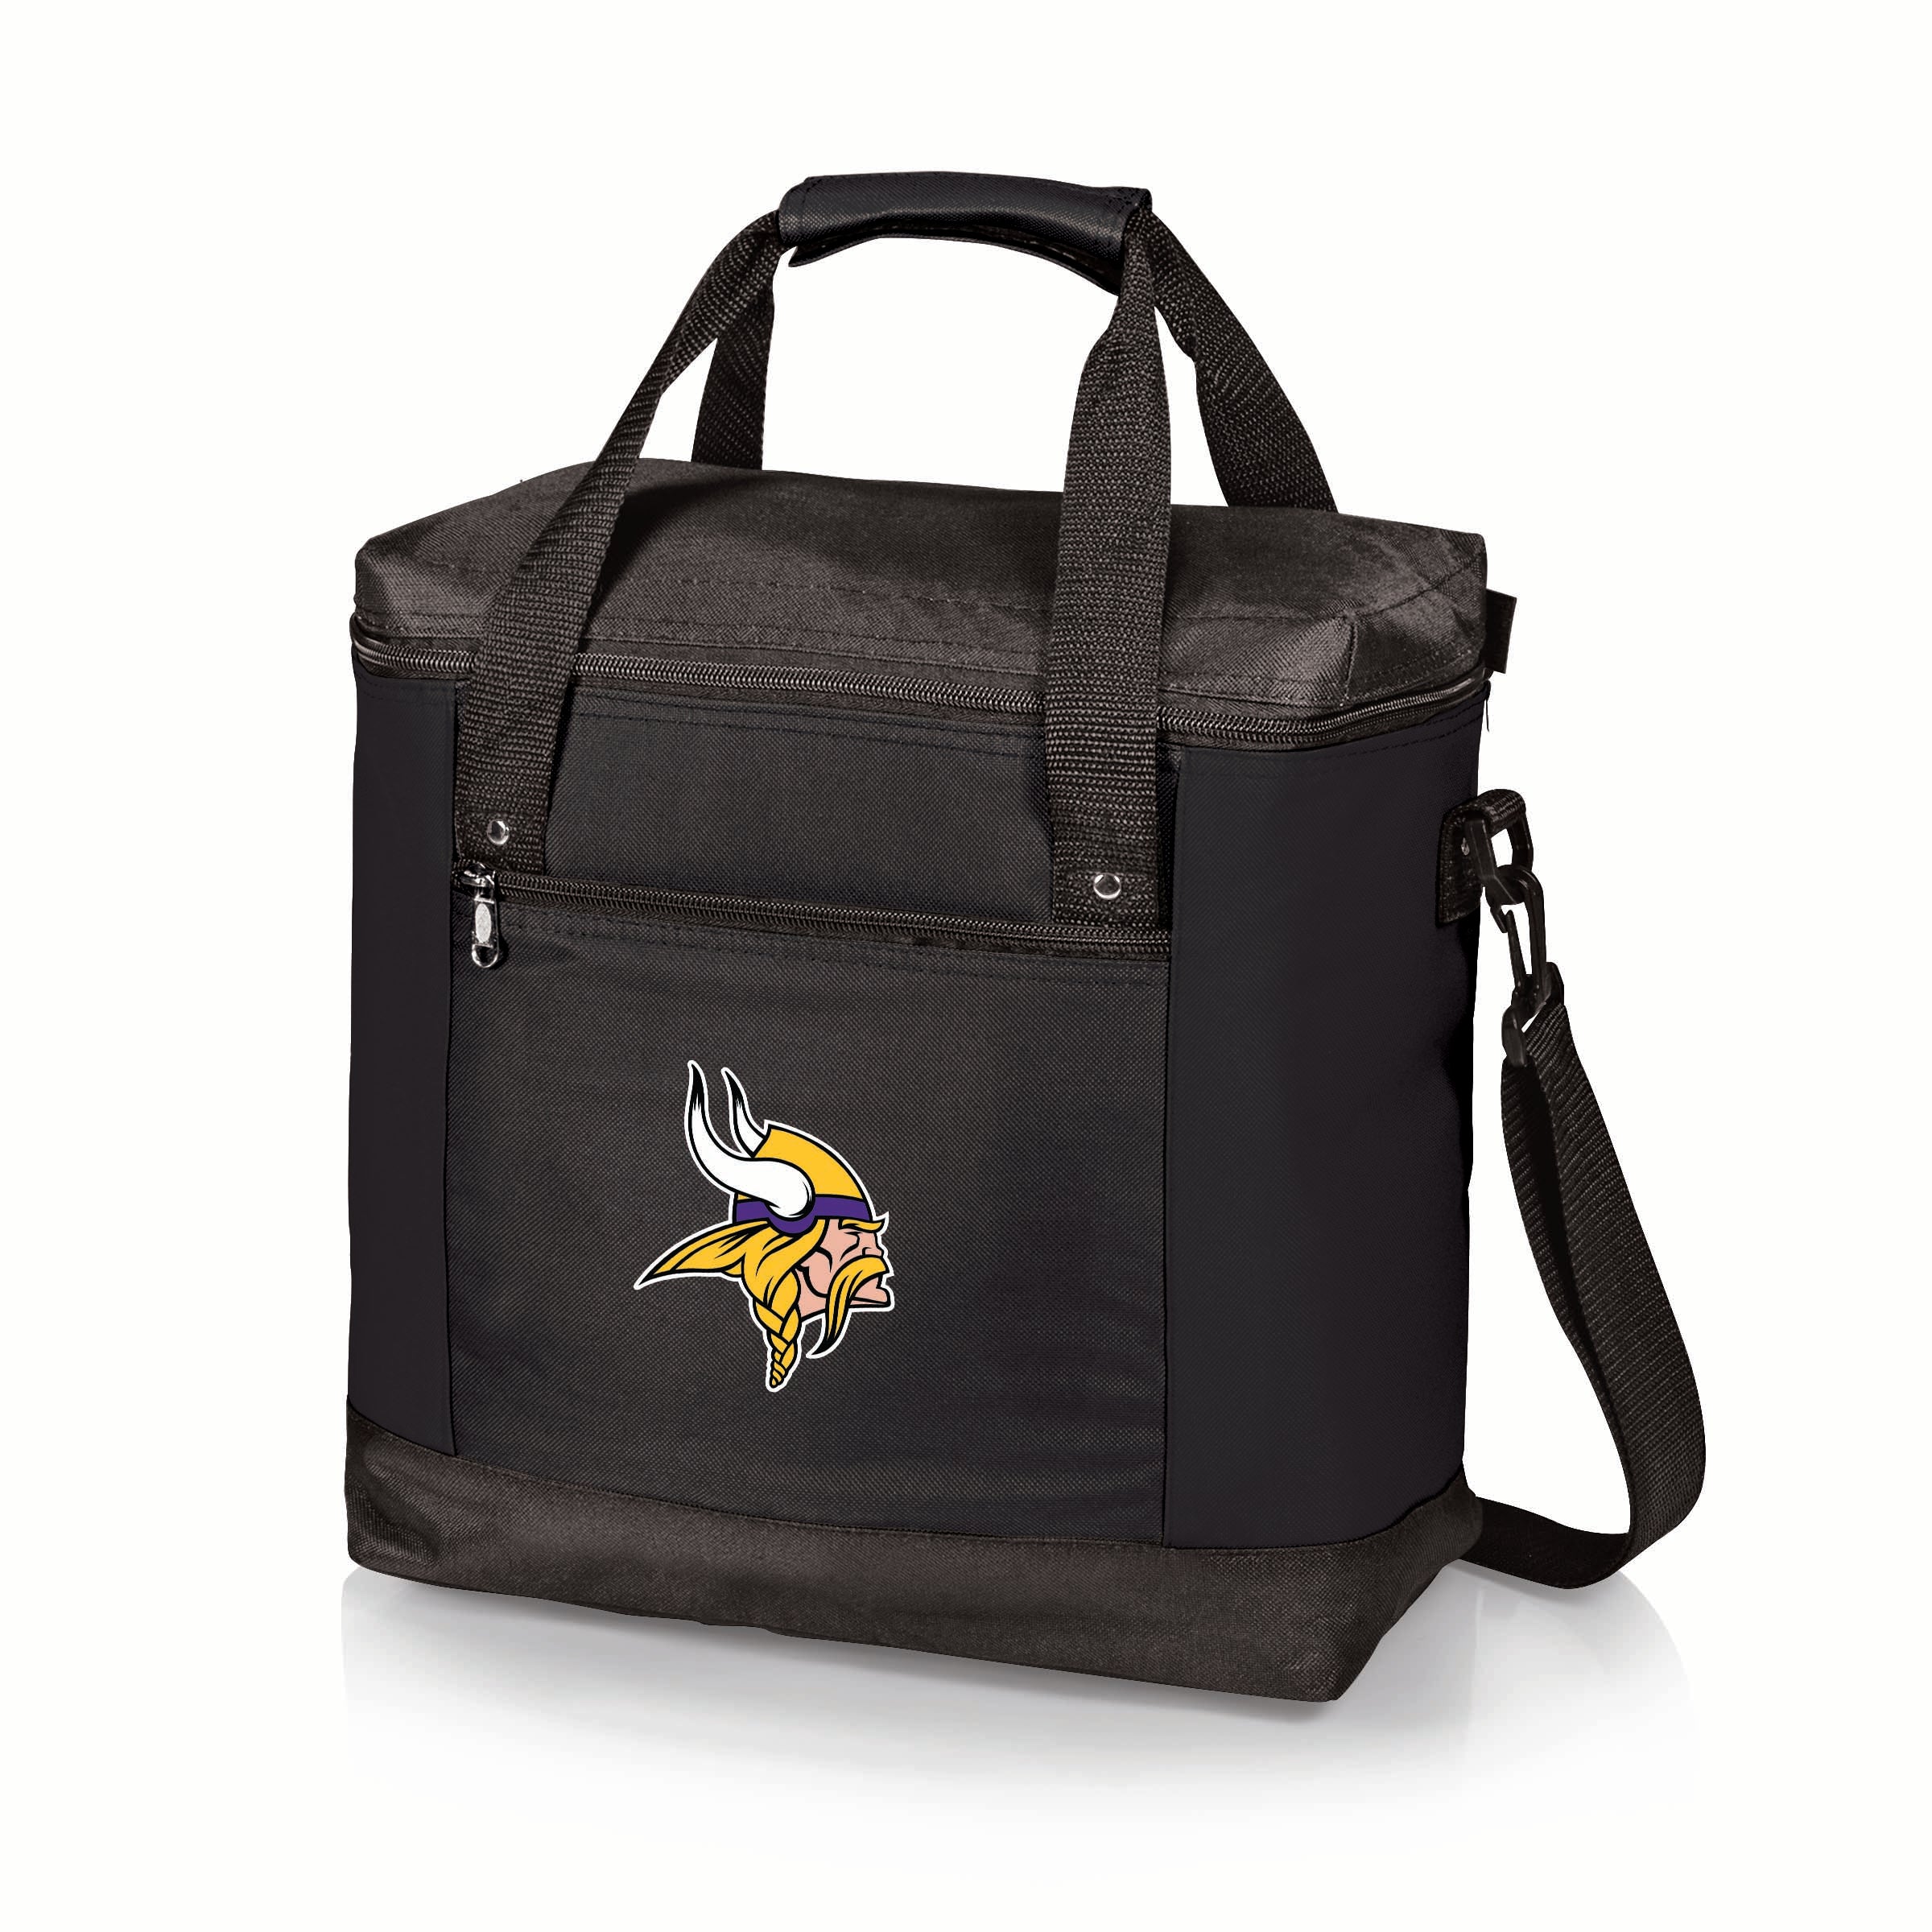 Minnesota Vikings - Montero Cooler Tote Bag